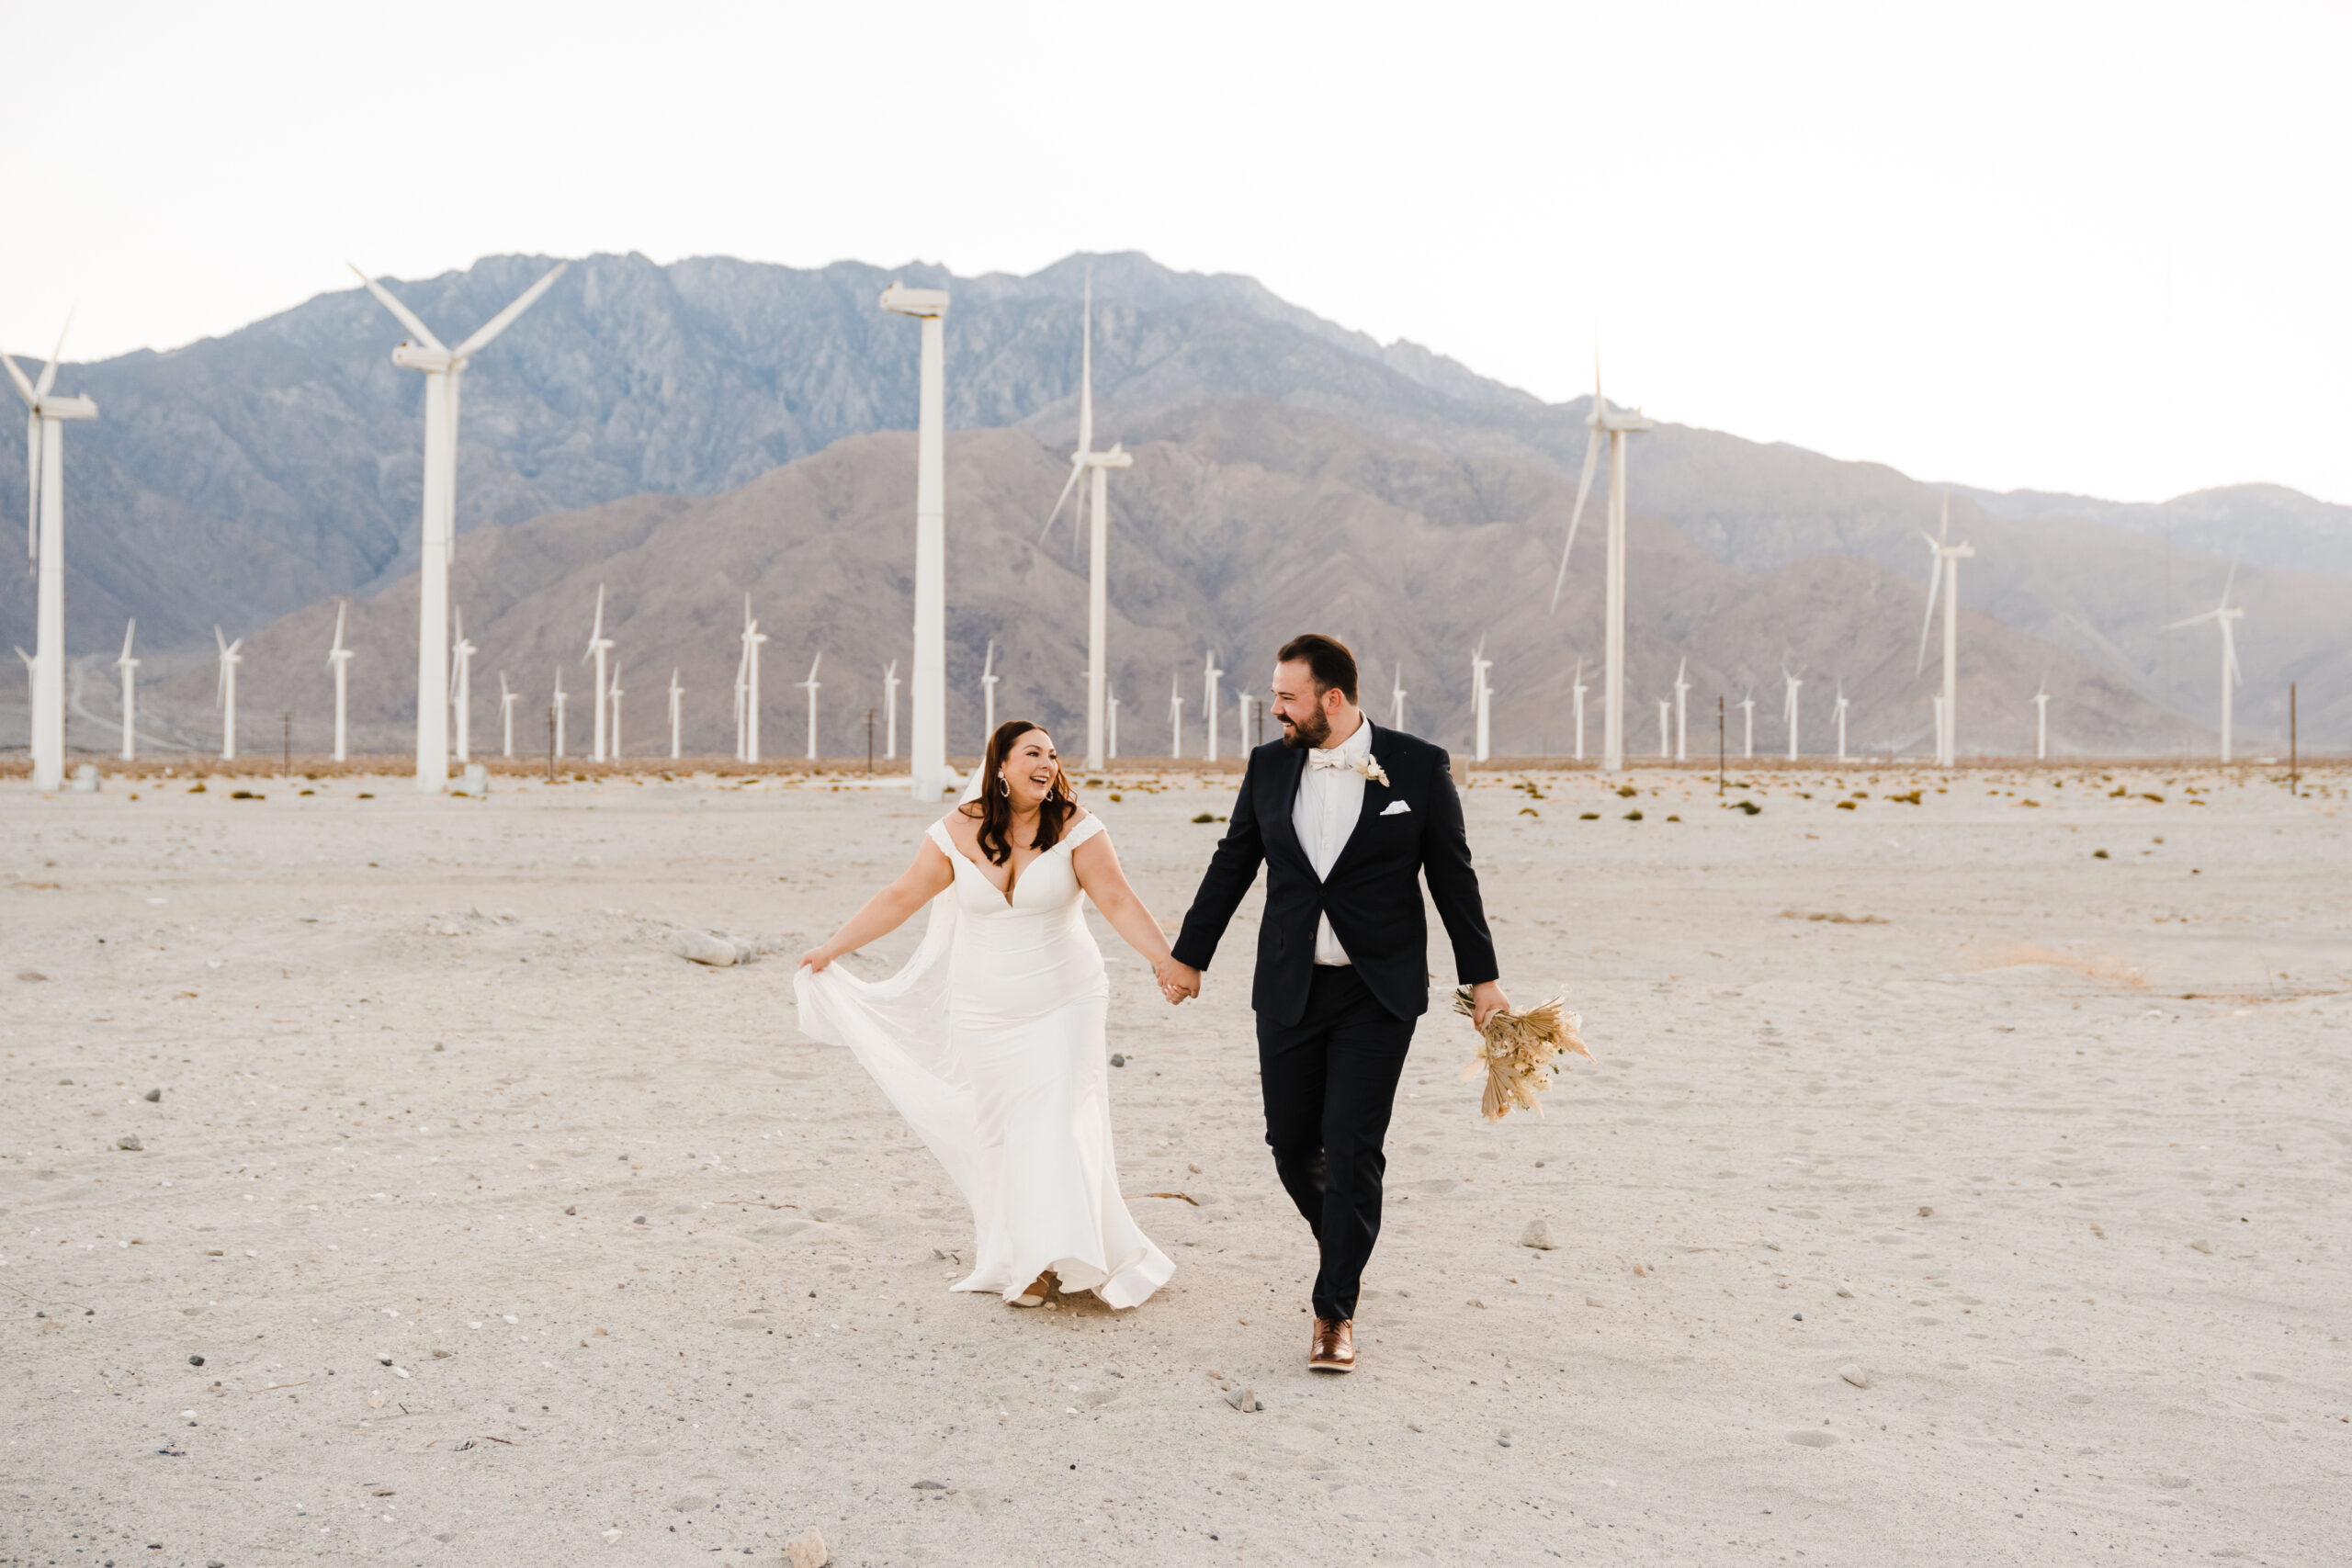 Palm Springs windmills wedding photo of bride and groom